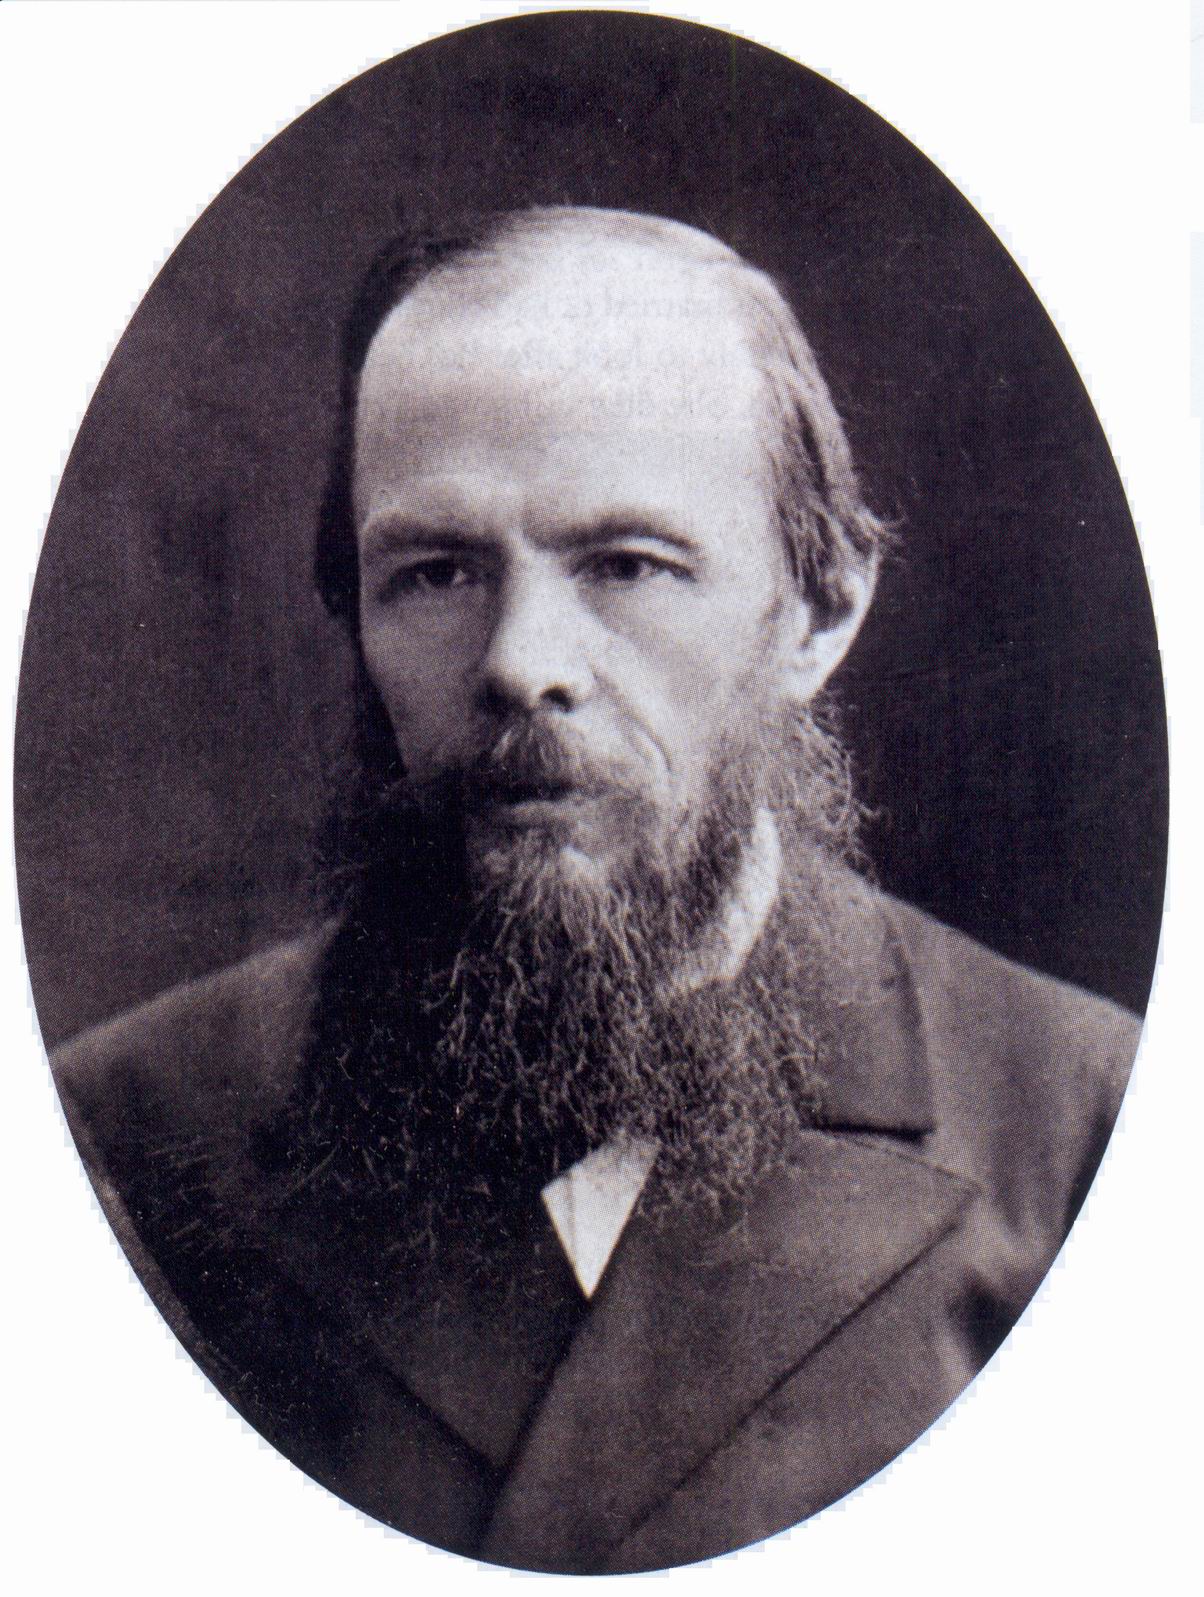 Реферат: Biogrophy Of Dostoevsky Essay Research Paper Fyodor